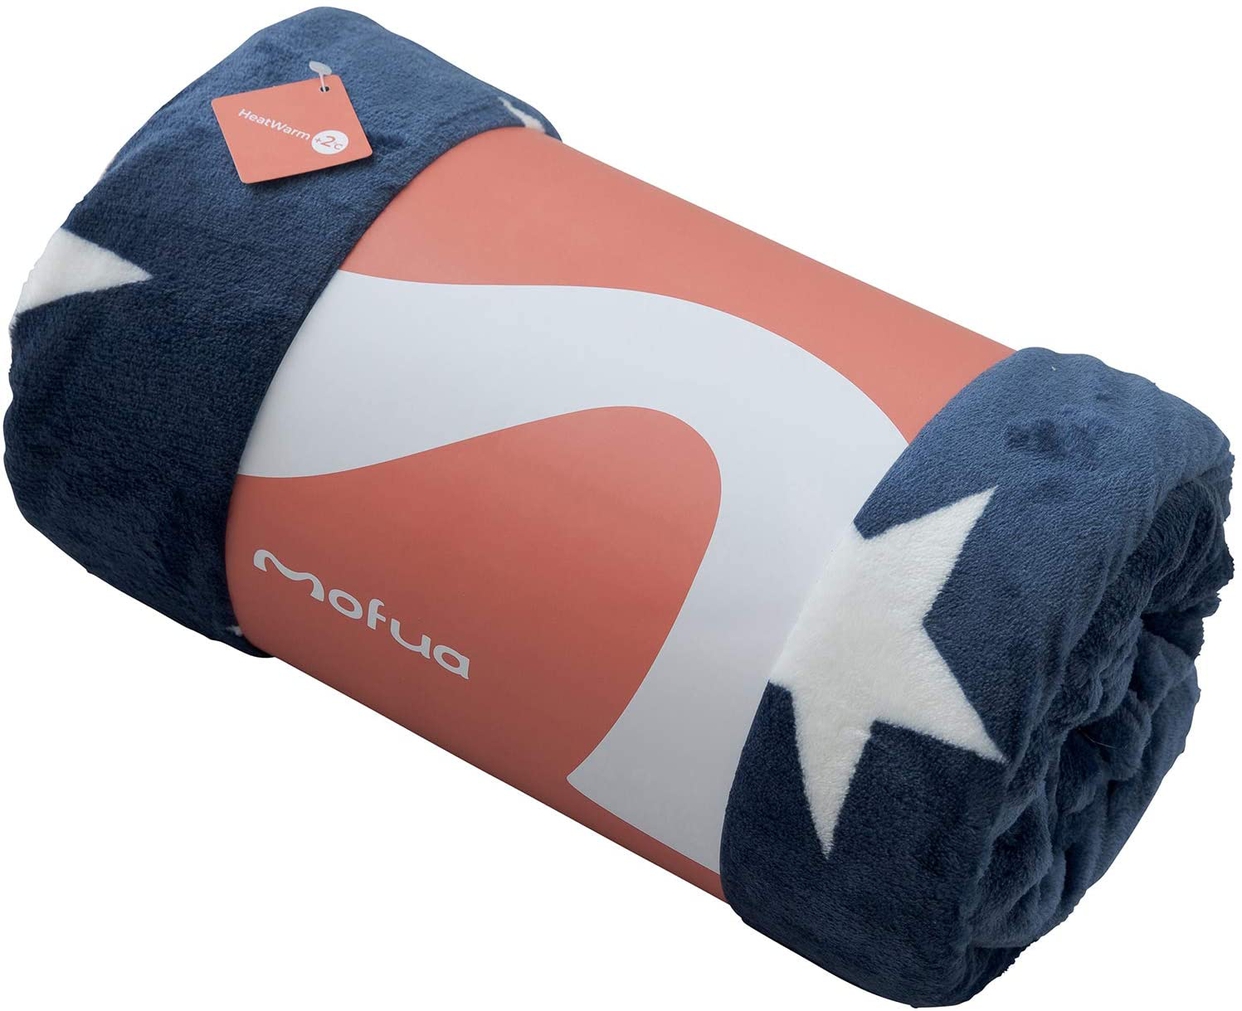 mofua(モフア) プレミアムマイクロファイバー毛布